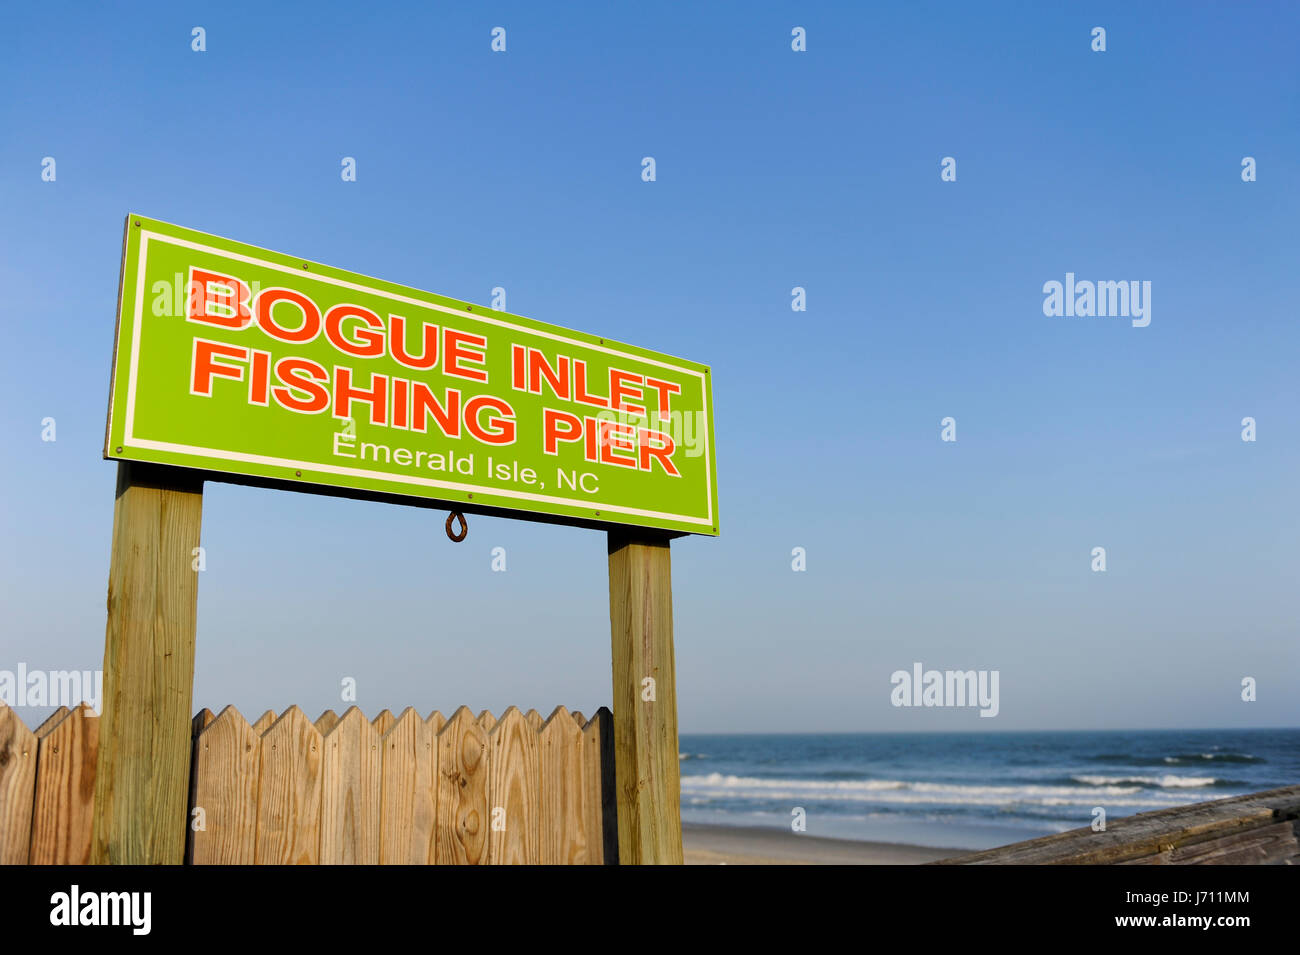 Bogue Inlet Fishing Pier Sign at Emerald Island North Carolina Stock Photo